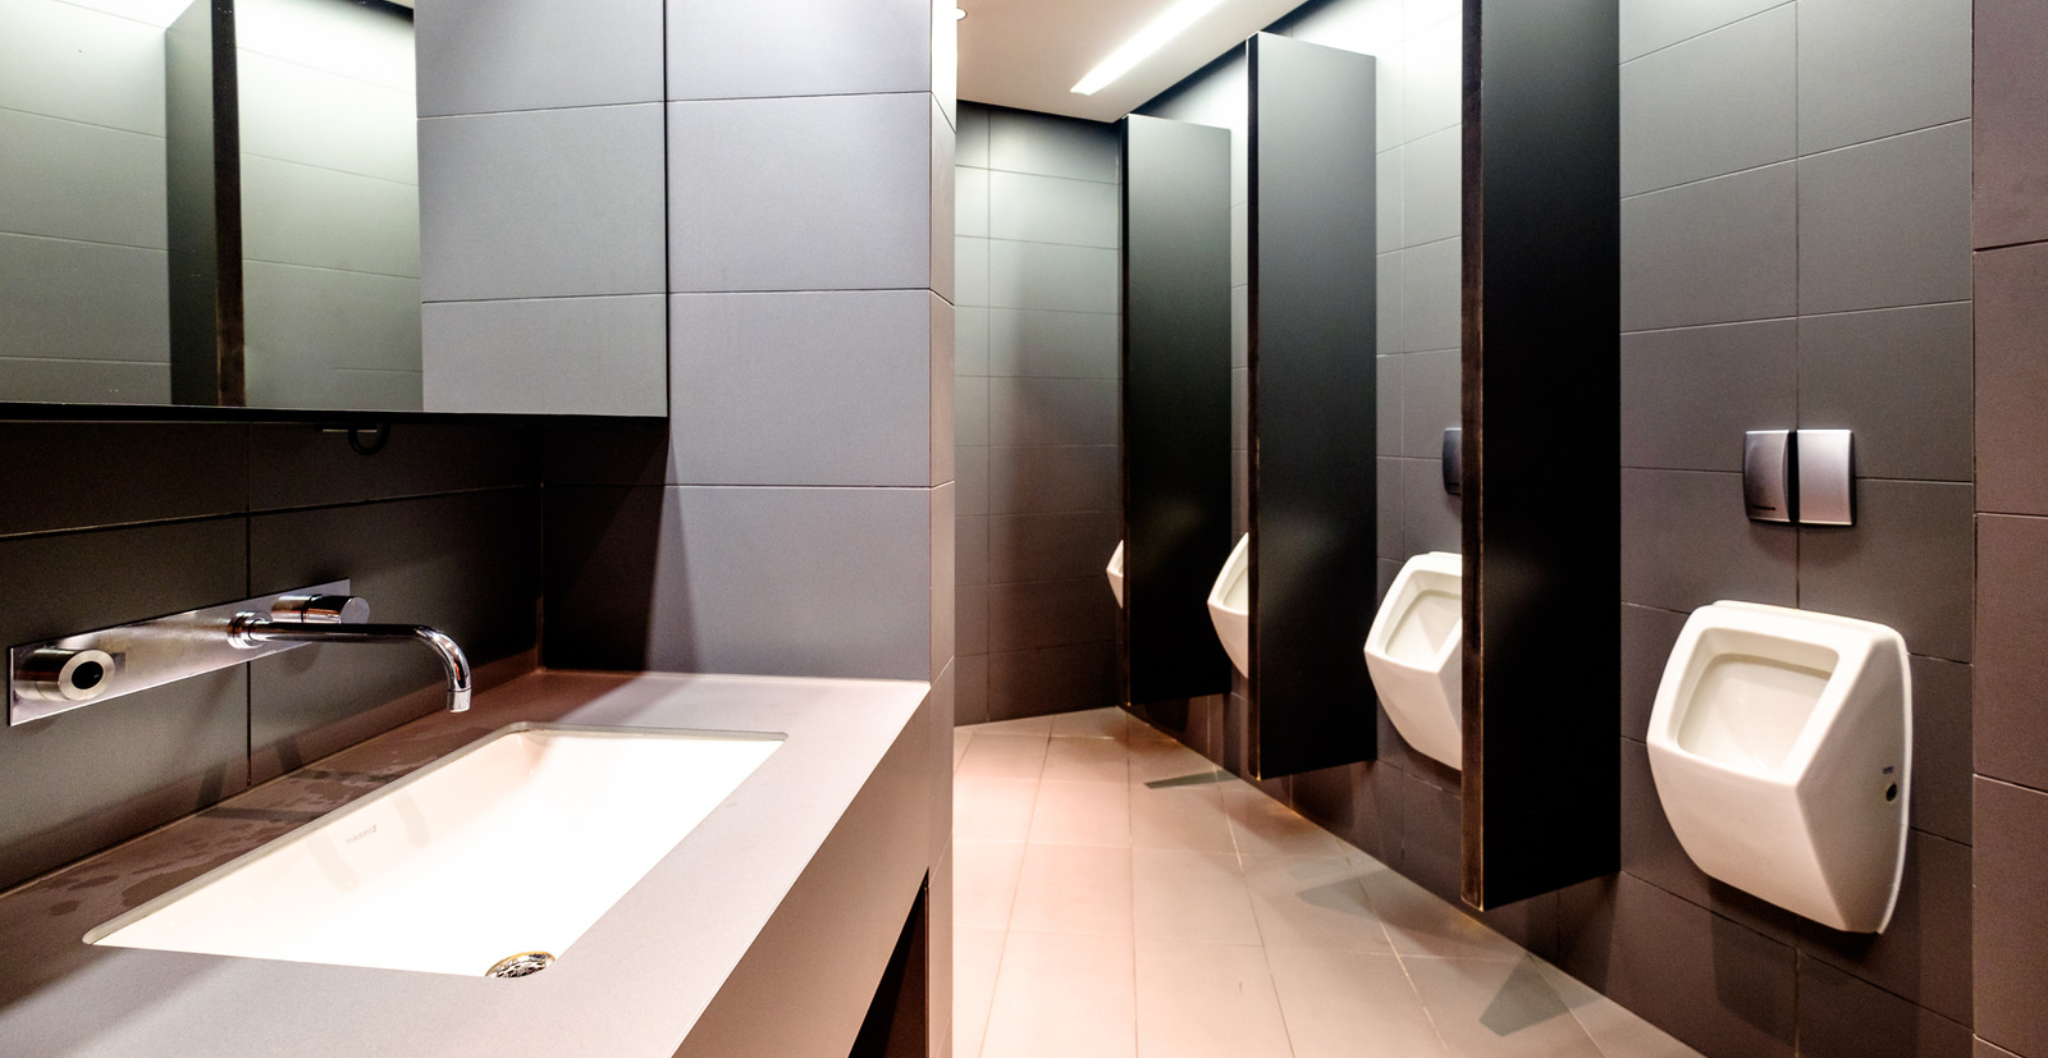 Decontaminate, Disinfect, Deodorize, Or Sanitize Public Restrooms And Bathrooms